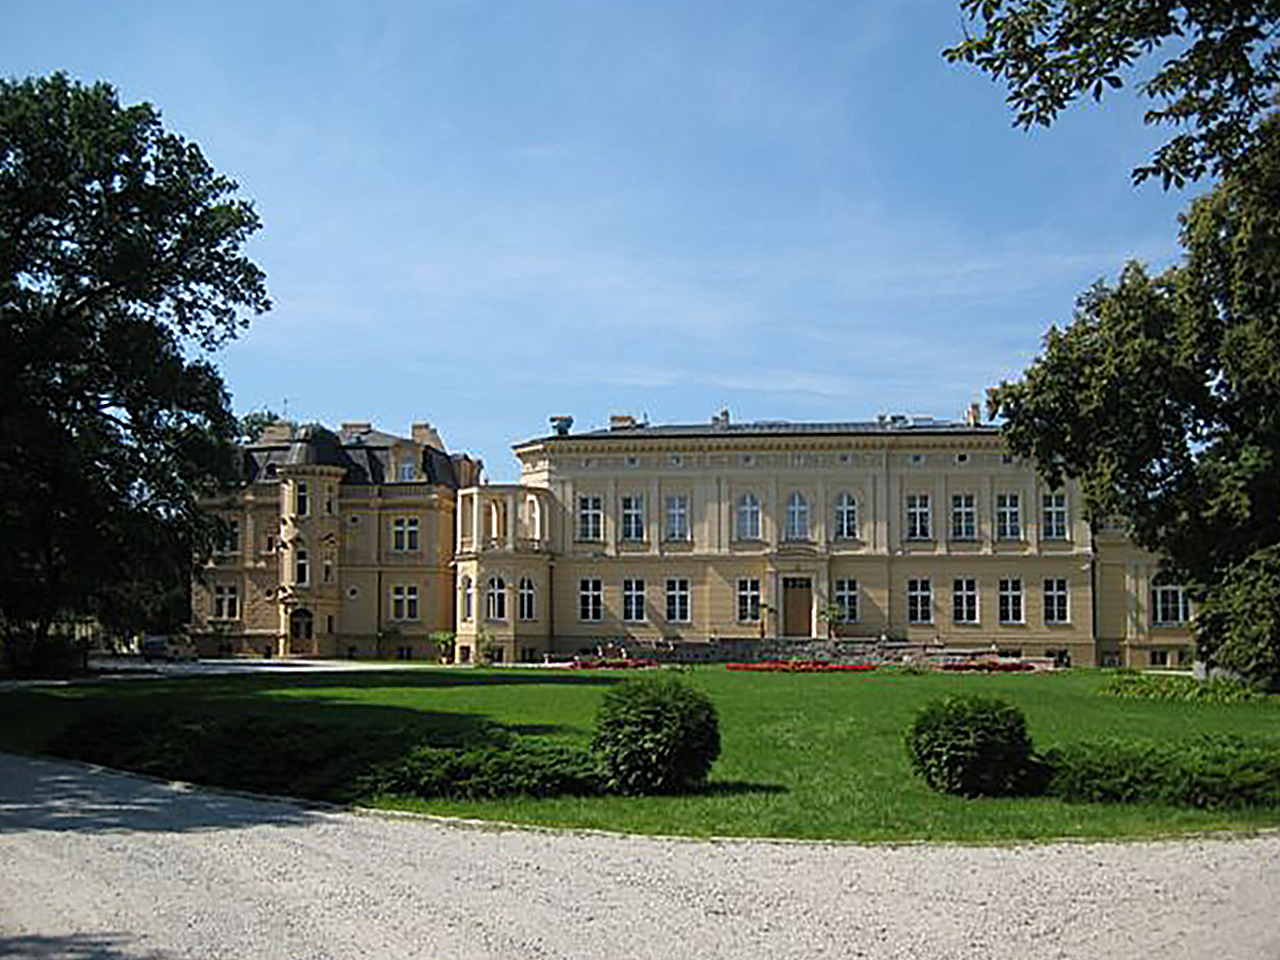 Neues Schloss Ostrometzko- Vorderfront - 1995